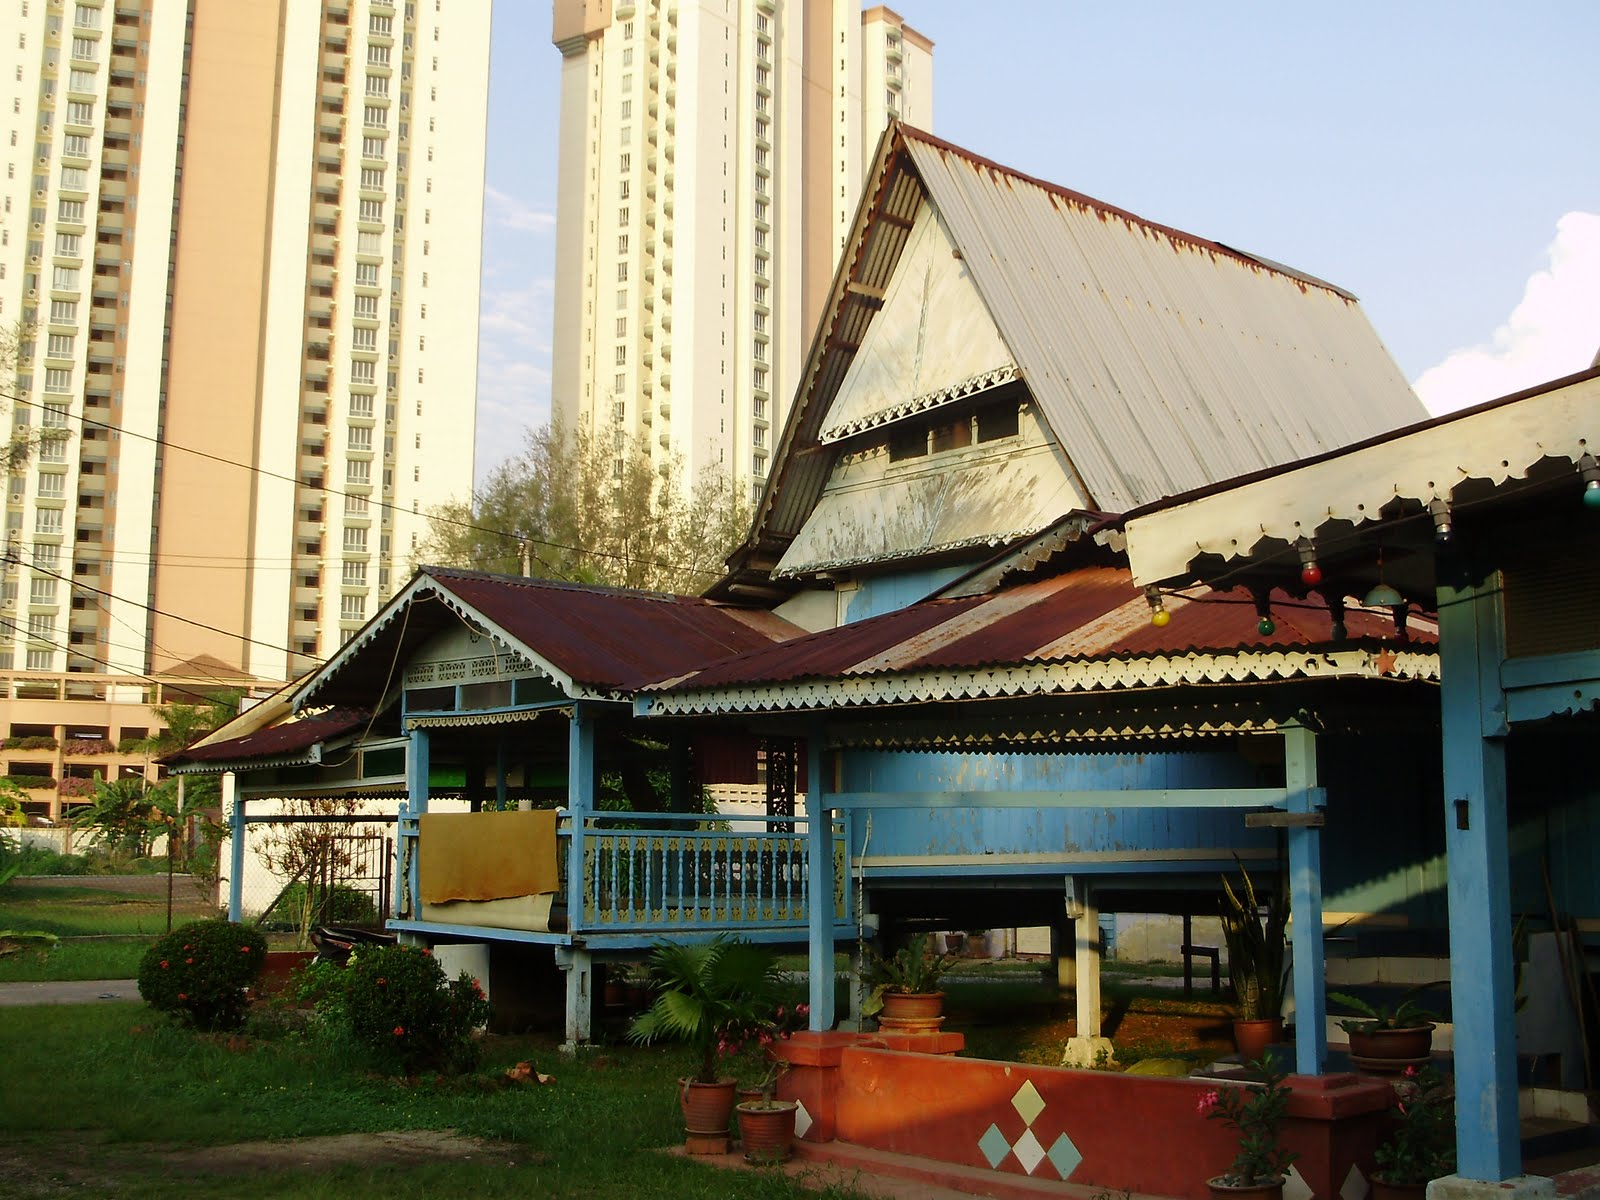 ctkebaya Rumah  Tradisional  Melayu  Melaka